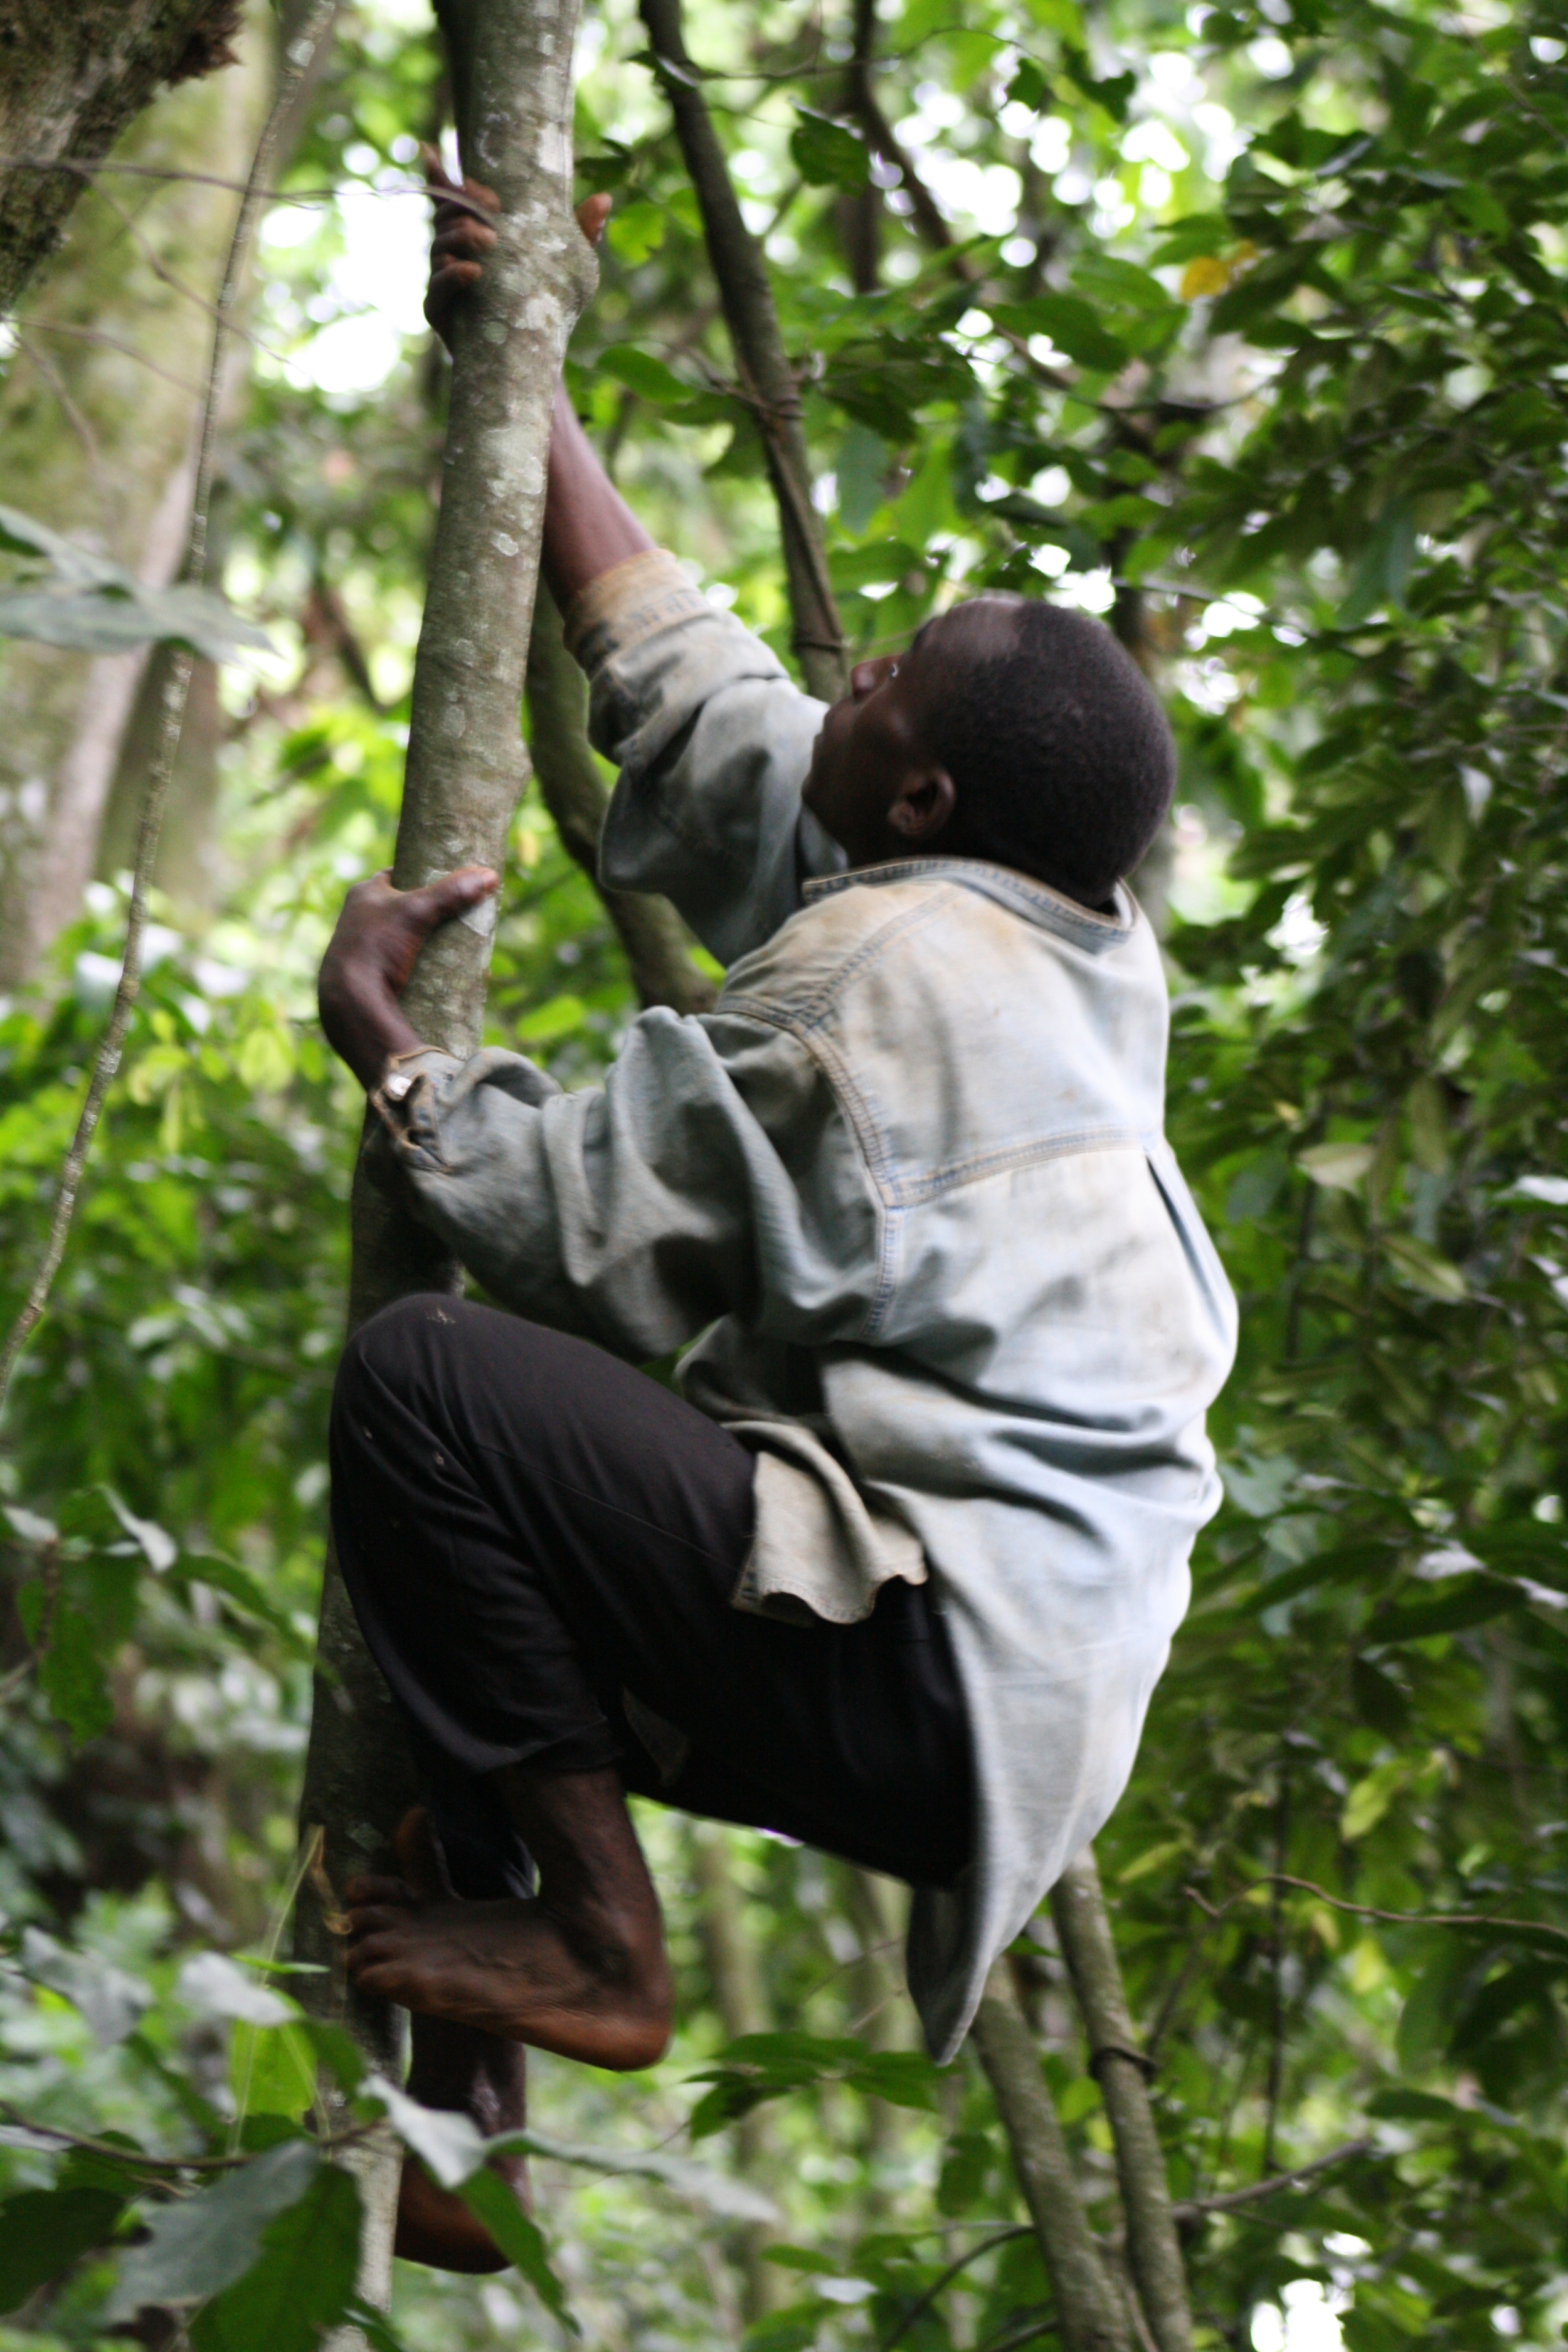  Batwa man climbing tree in Bwindi Impenetrable Forest National Park, Uganda 